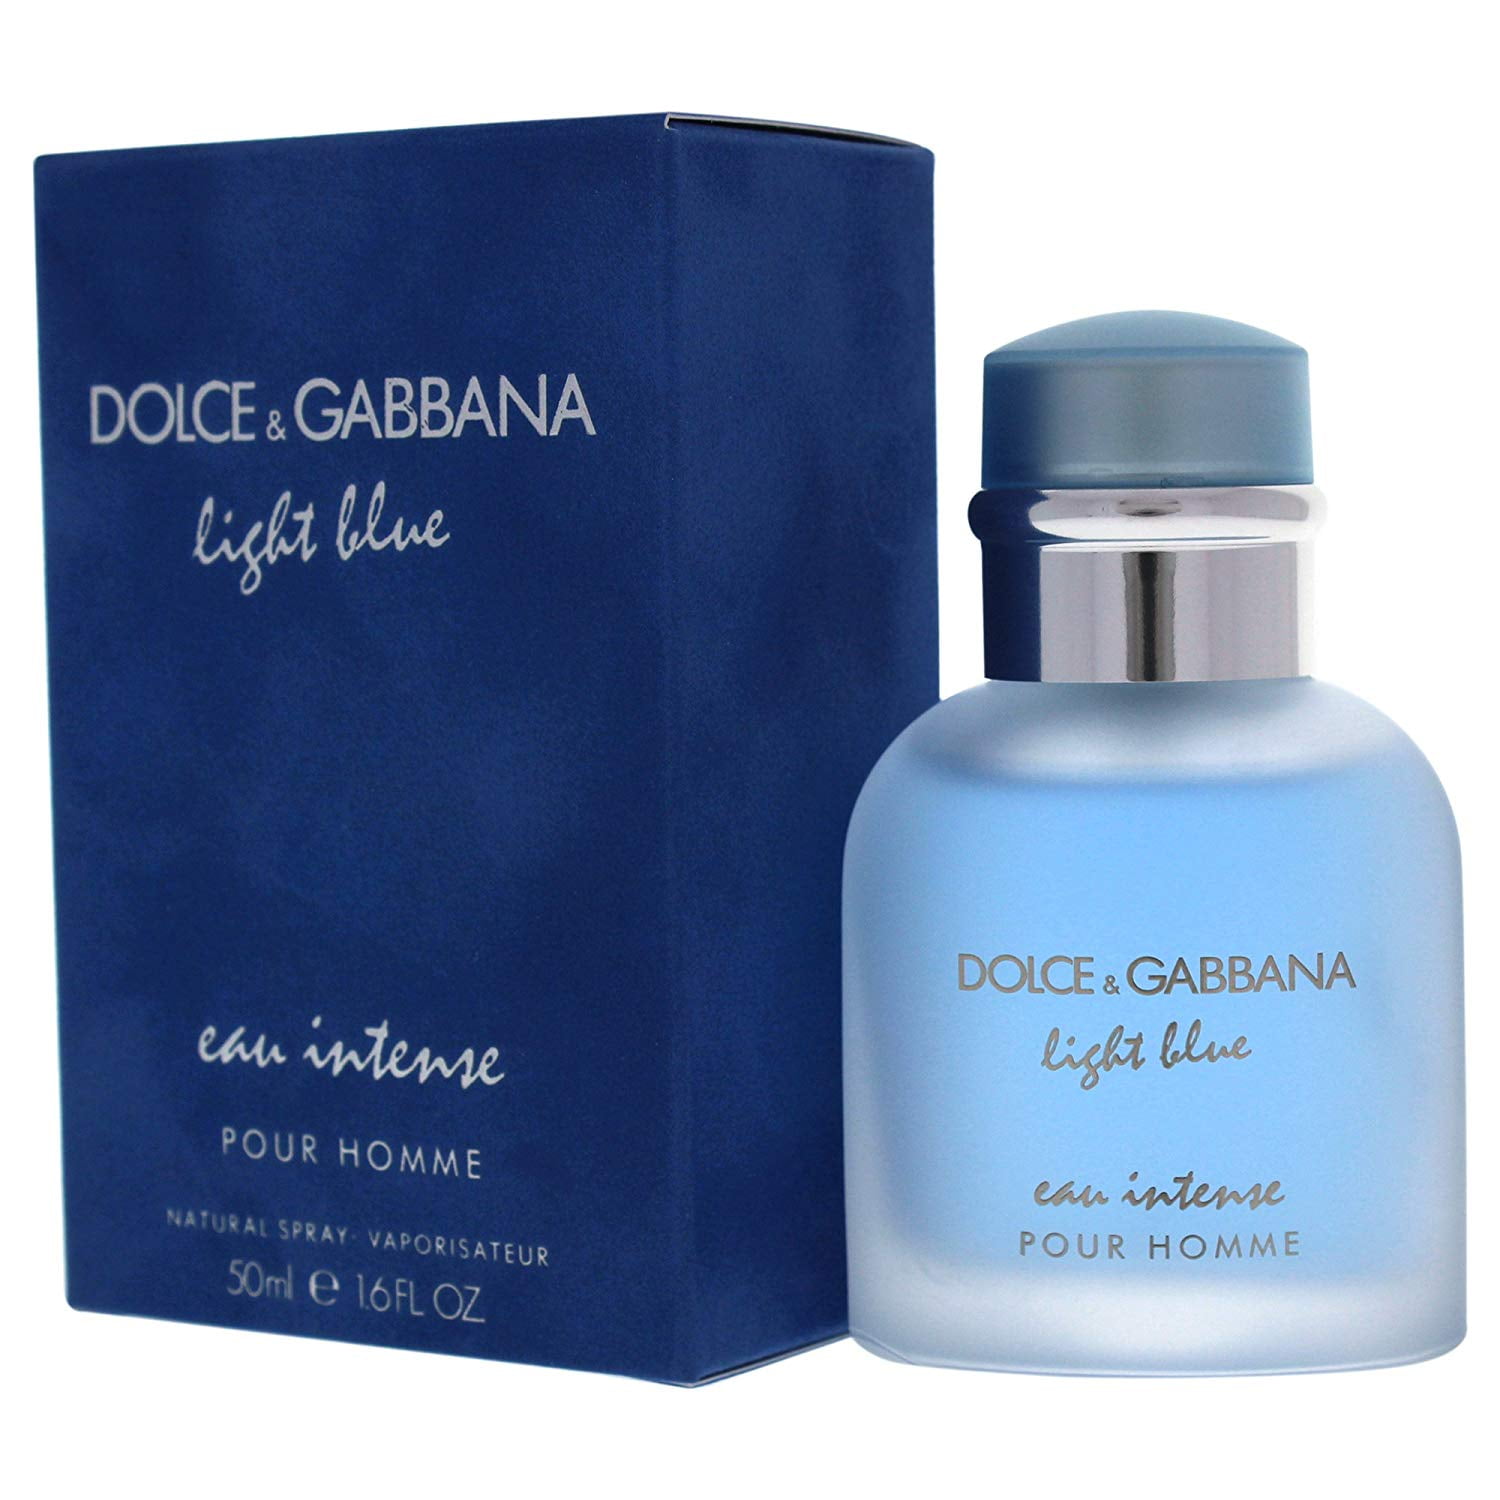 dolce and gabbana perfume light blue intense